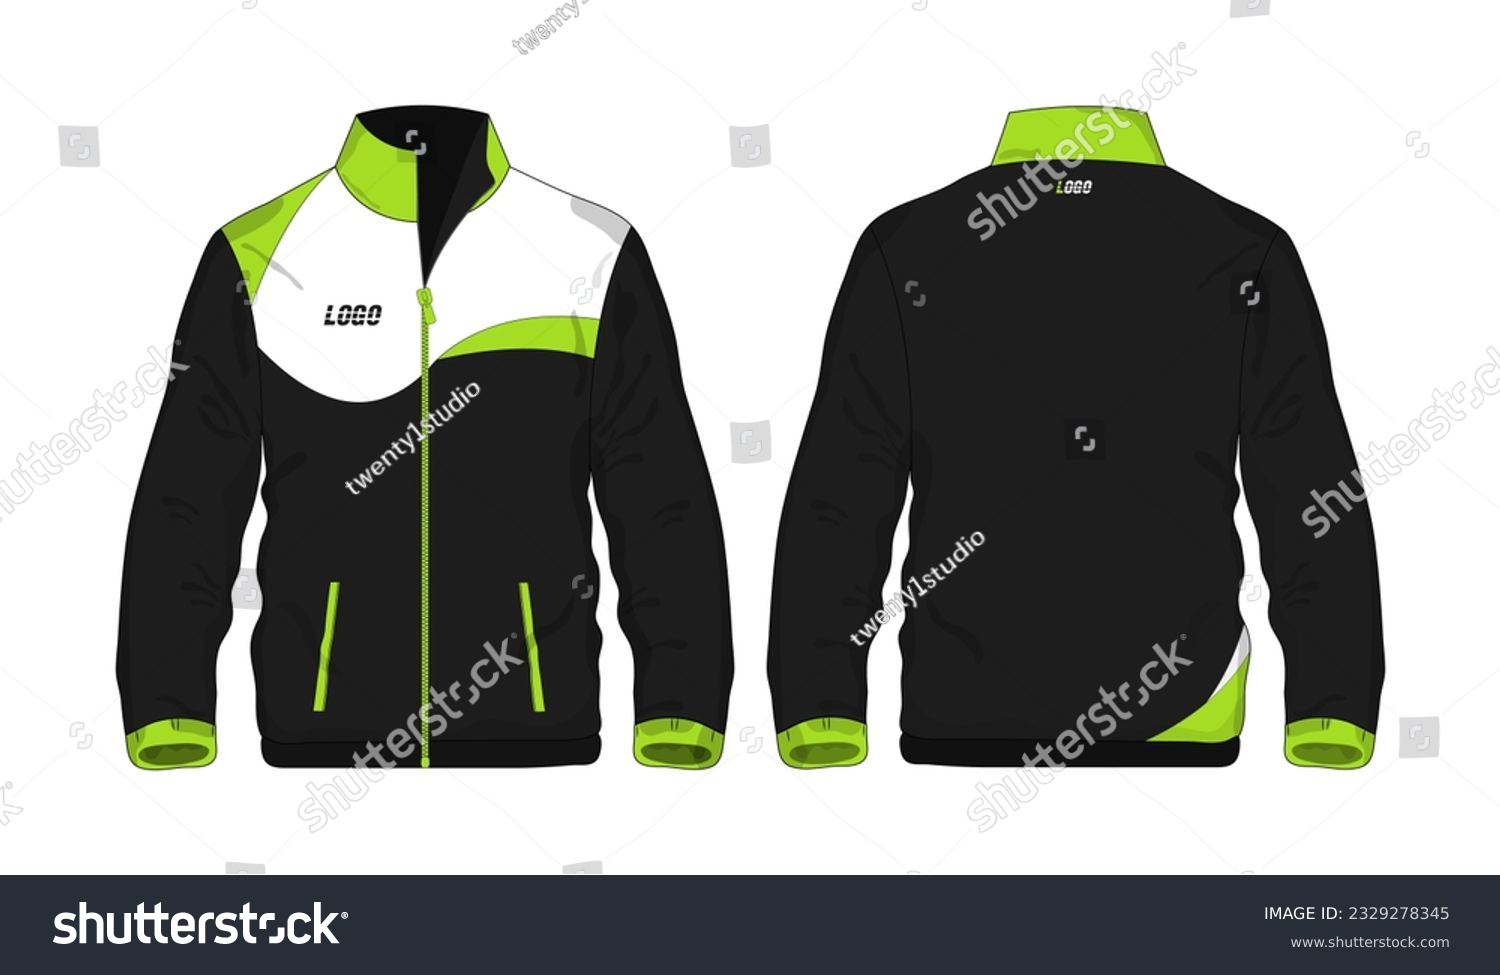 SVG of Sport Jacket green and black template for design on white background. Vector illustration eps 10. svg